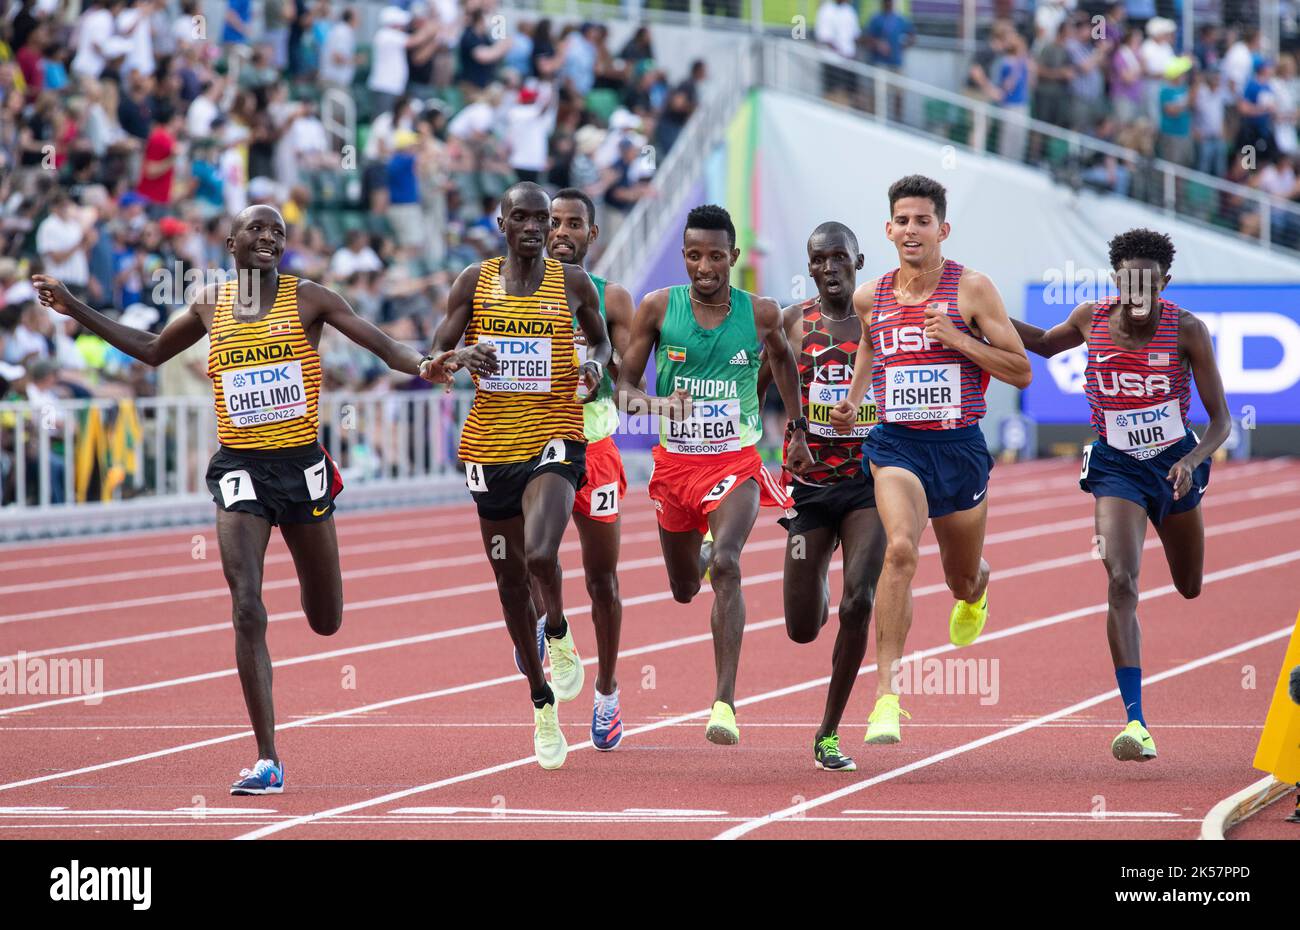 Oscar Chelimo, Joshua Cheptegei, Selemon Barega and Grant Fisher competing in the men’s 5000m heats at the World Athletics Championships, Hayward Fiel Stock Photo